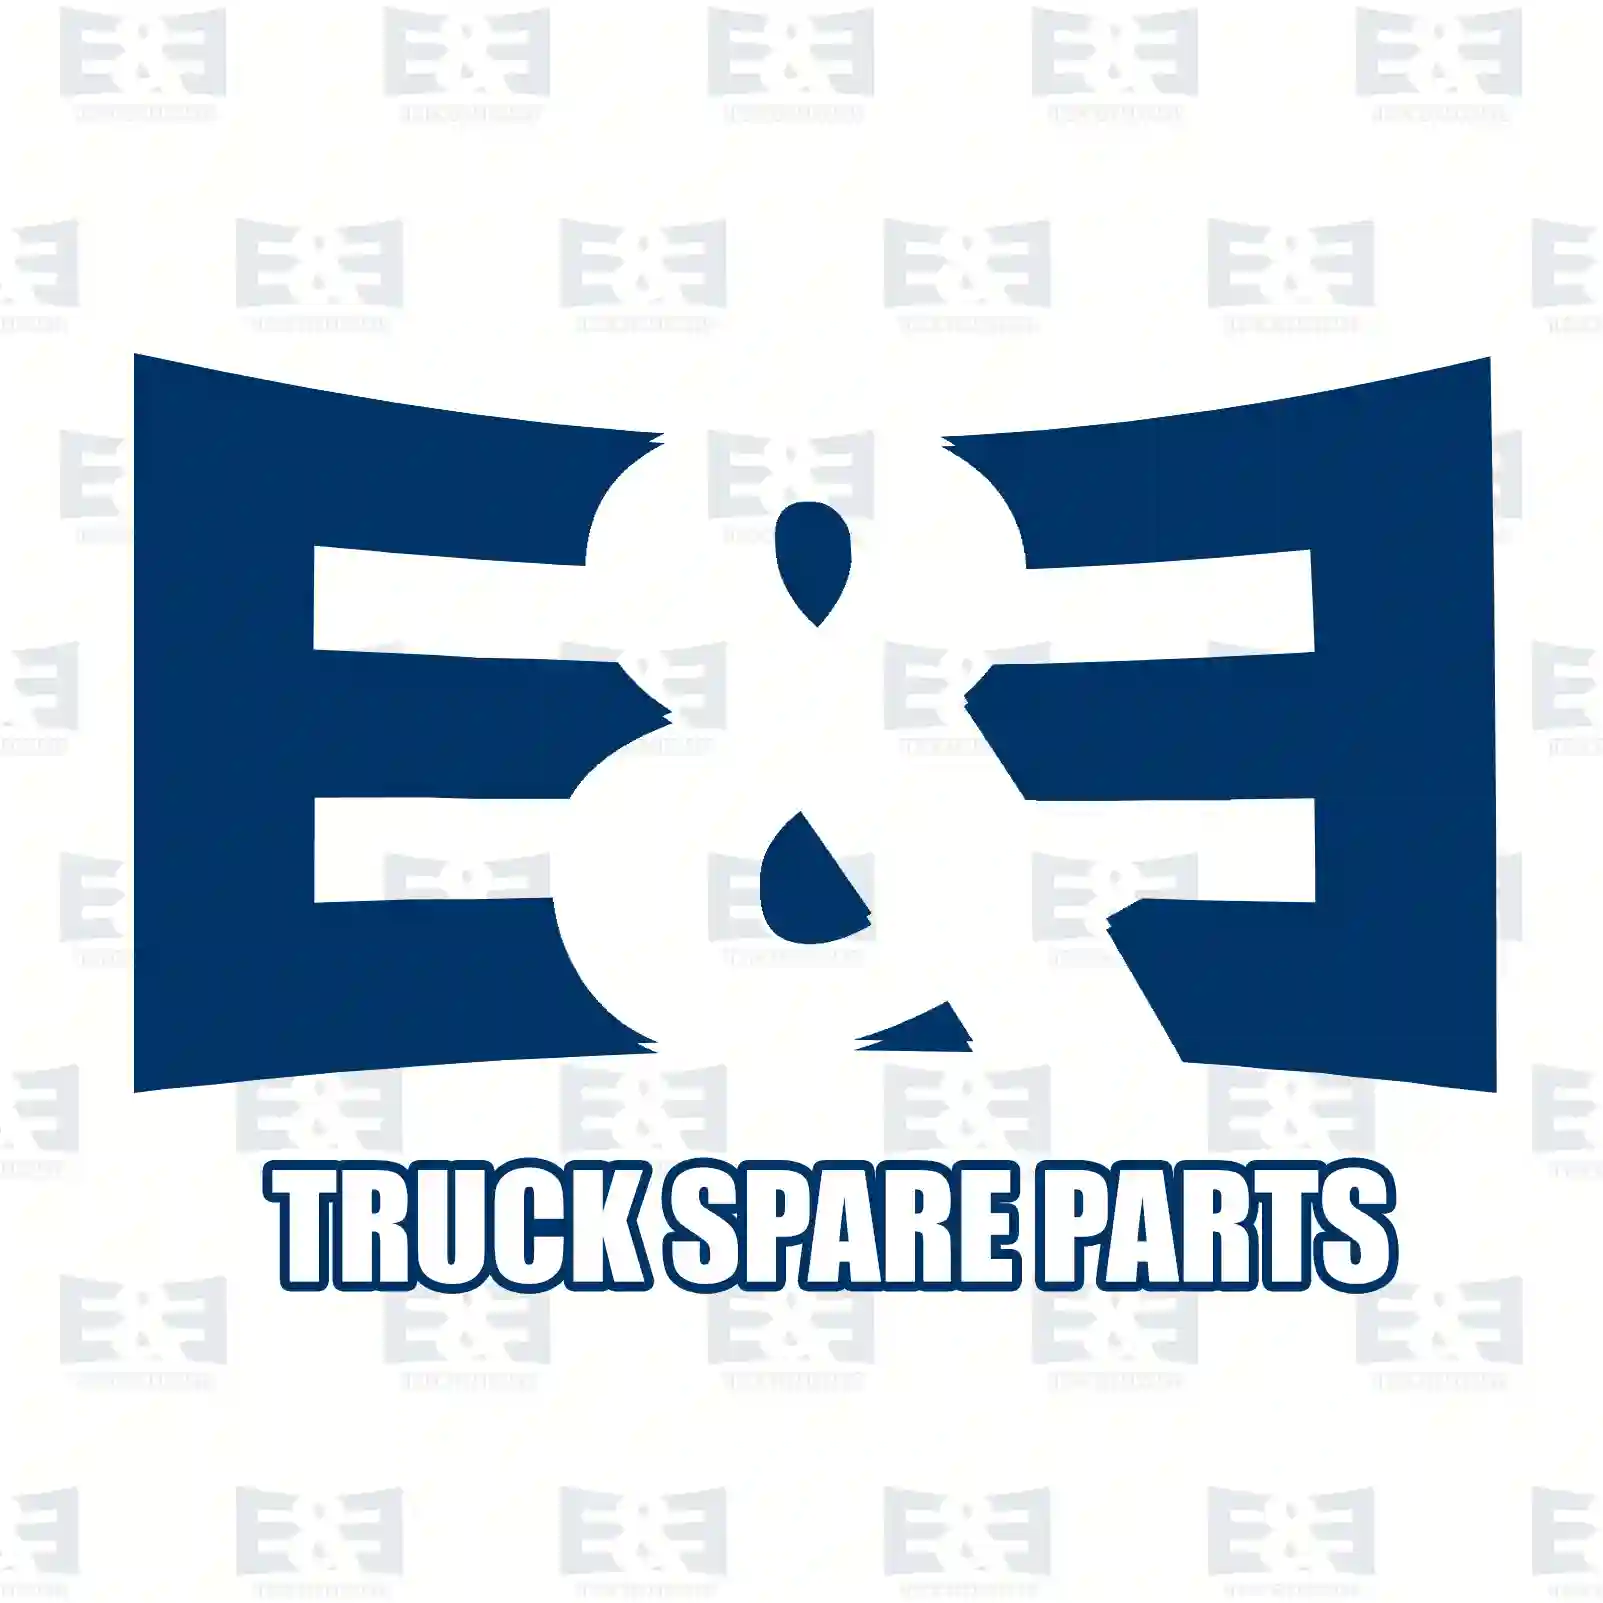 Wear indicator kit, complete, 2E2296014, 36508226007, 0035 ||  2E2296014 E&E Truck Spare Parts | Truck Spare Parts, Auotomotive Spare Parts Wear indicator kit, complete, 2E2296014, 36508226007, 0035 ||  2E2296014 E&E Truck Spare Parts | Truck Spare Parts, Auotomotive Spare Parts